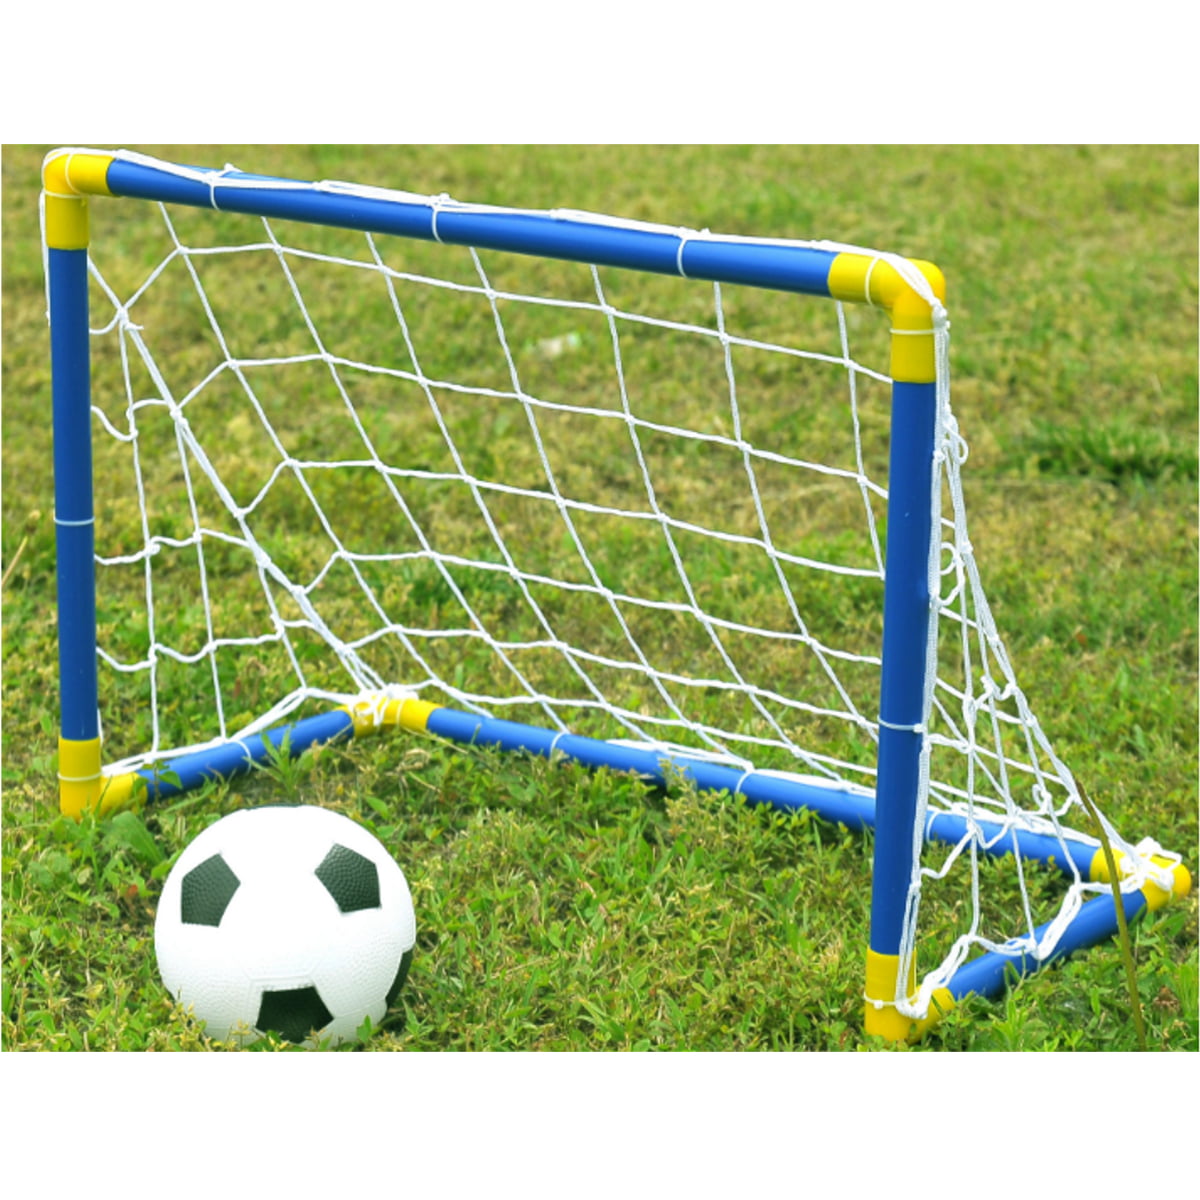 Kids Childs Football Door Training Soccer Goal Post Net Outdoor Garden Toy Gift 